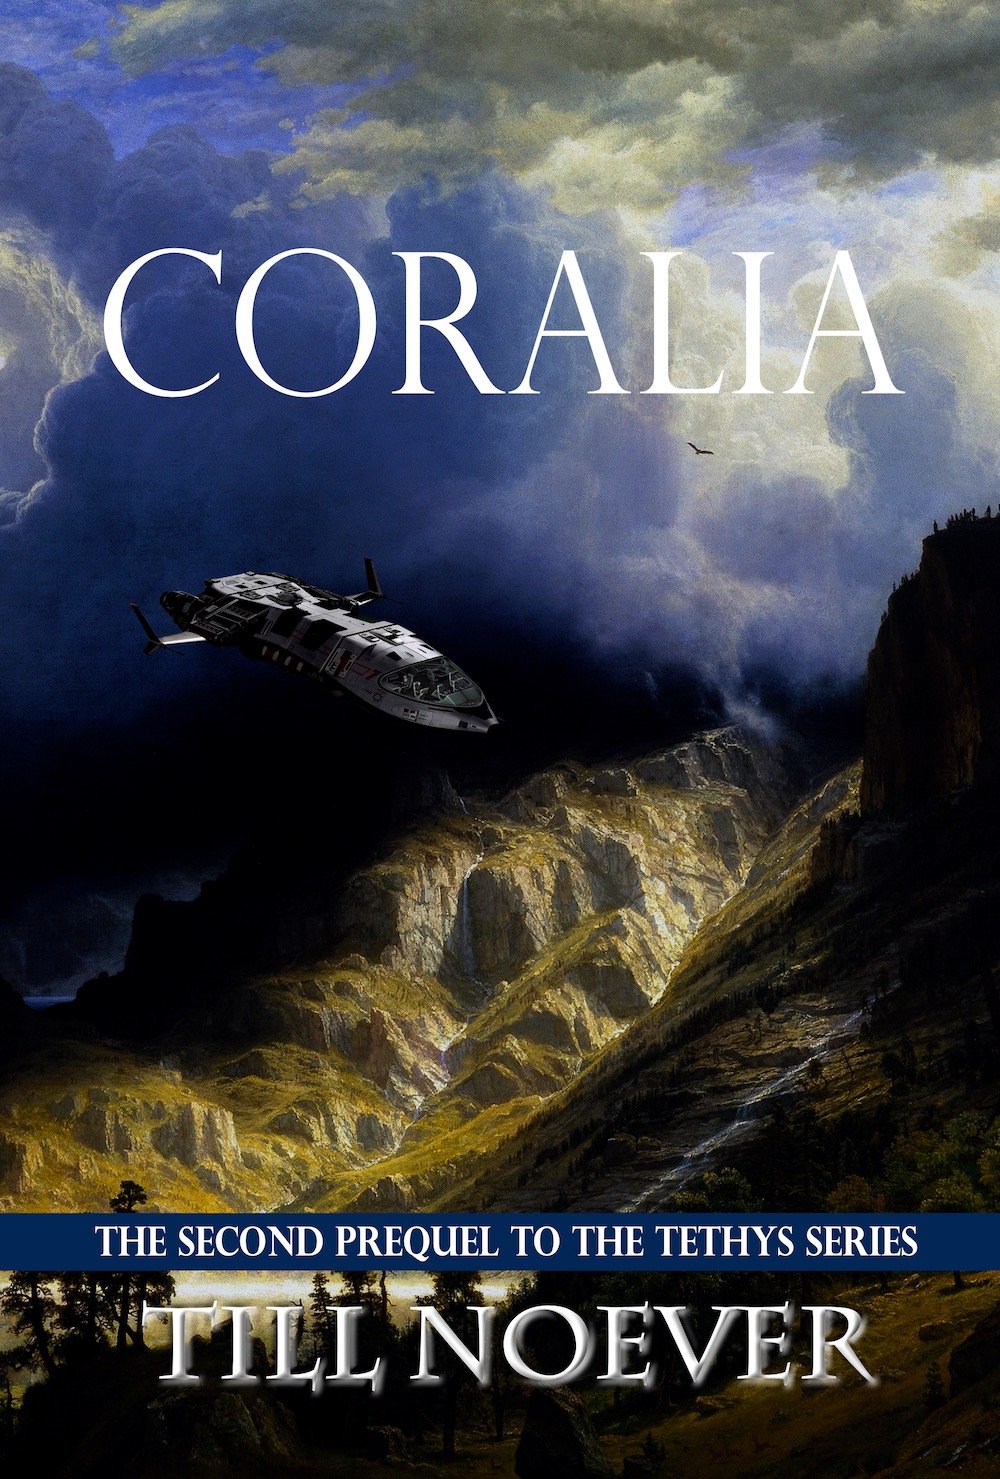 NEW CORALIA COVER KINDLE v1.1.0 mq.jpeg